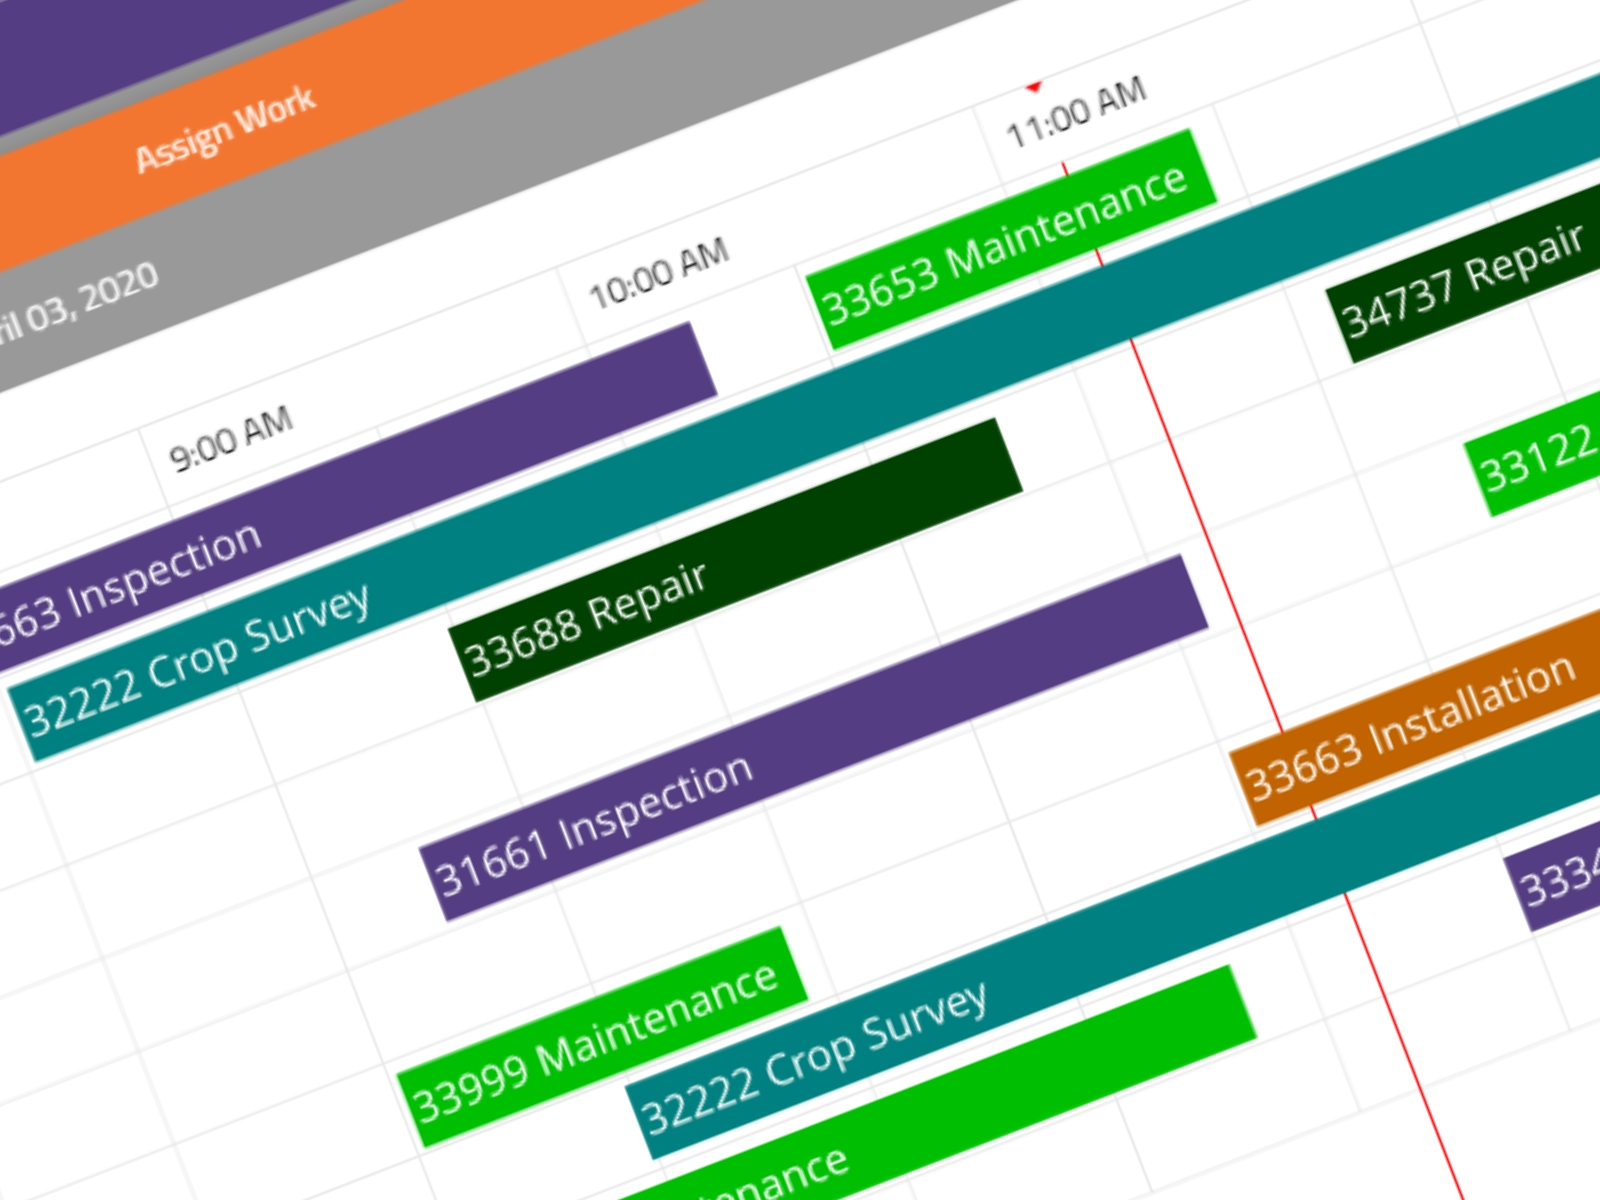 Flexible calendar enables easy planning of work.